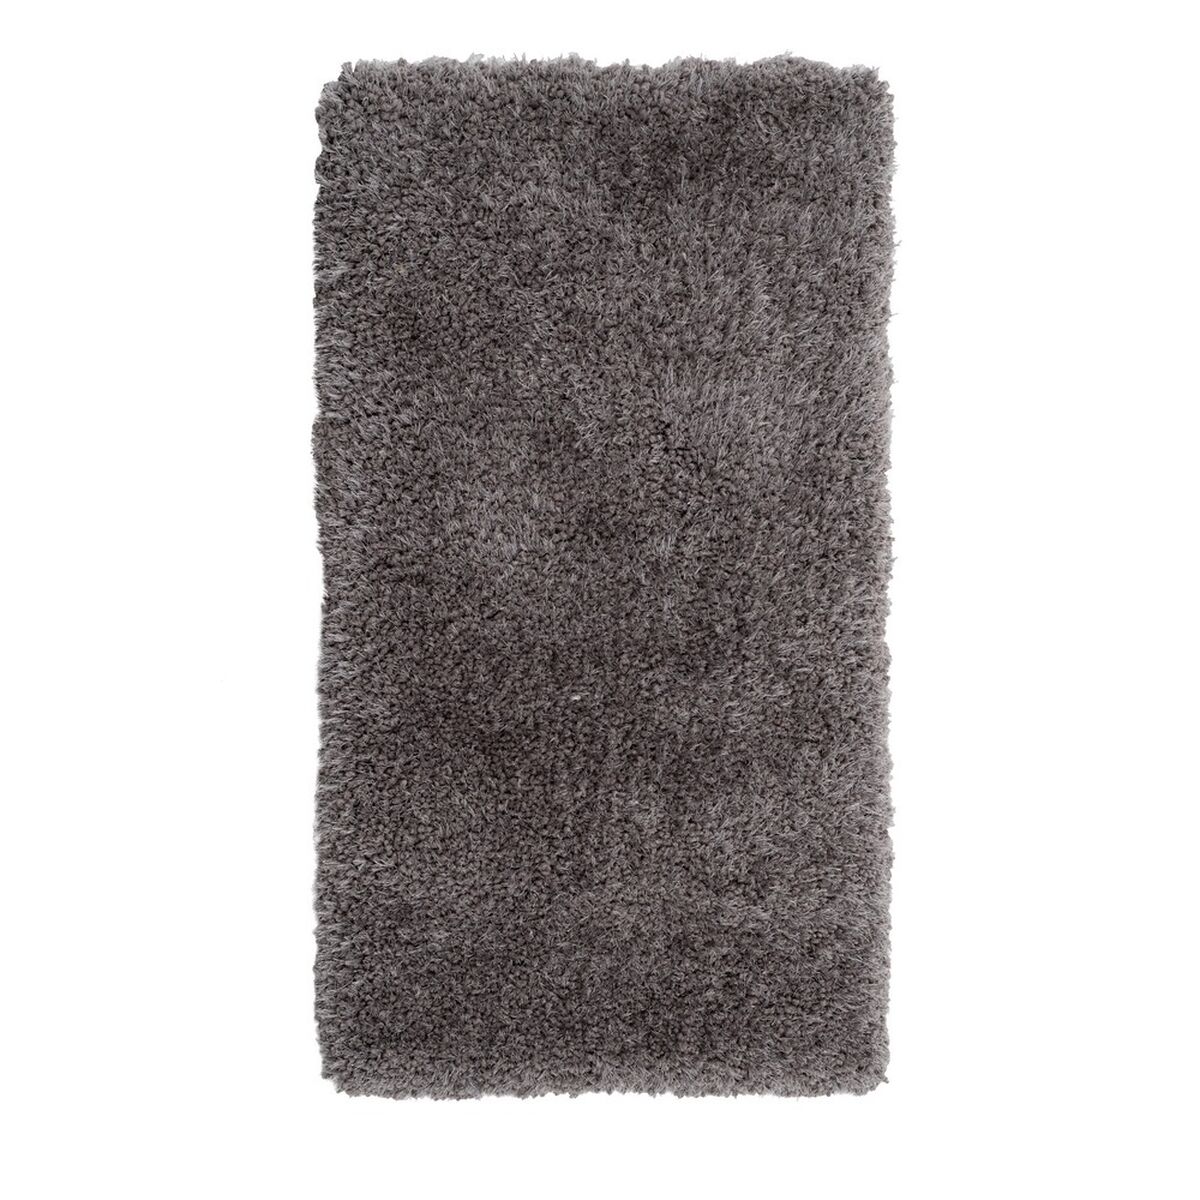 Carpet 80 x 150 cm Grey Polyester